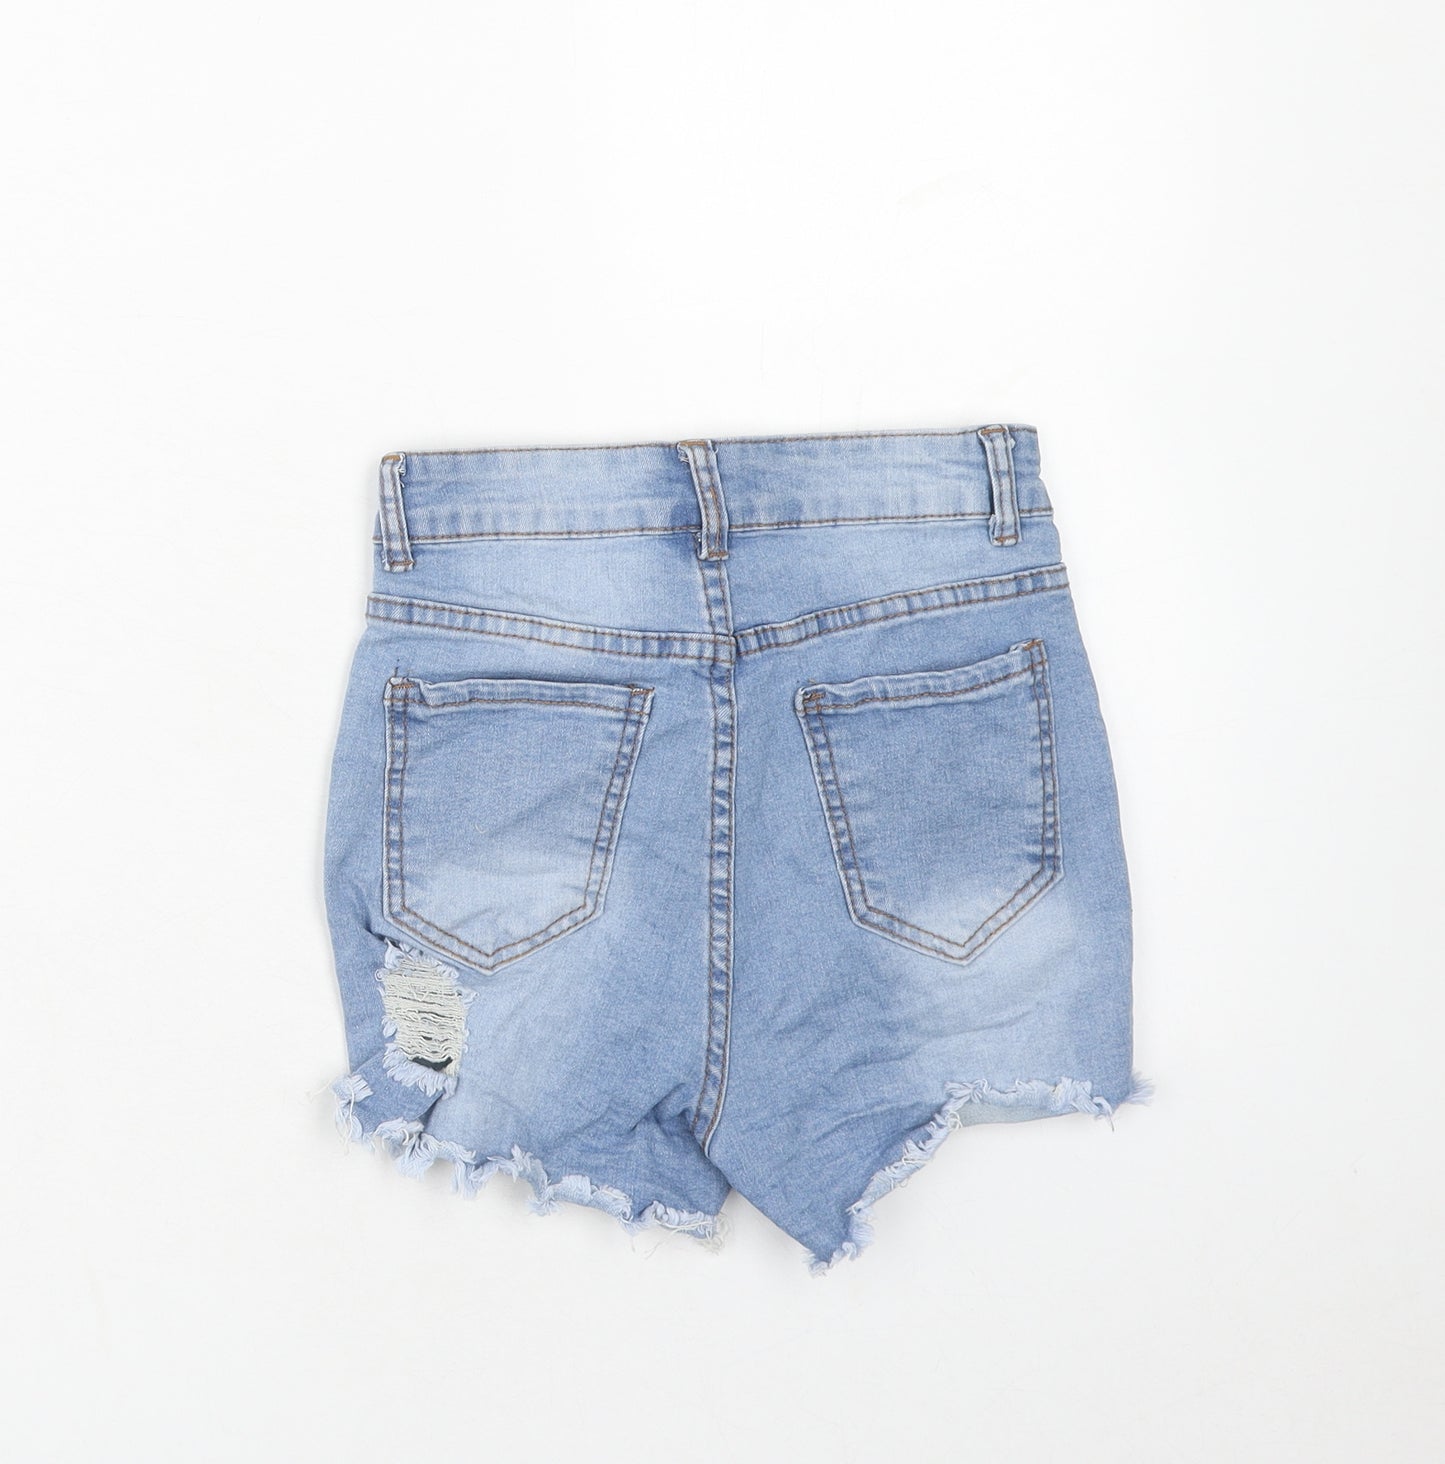 Denim Wise Womens Blue Cotton Cut-Off Shorts Size 6 Regular Zip